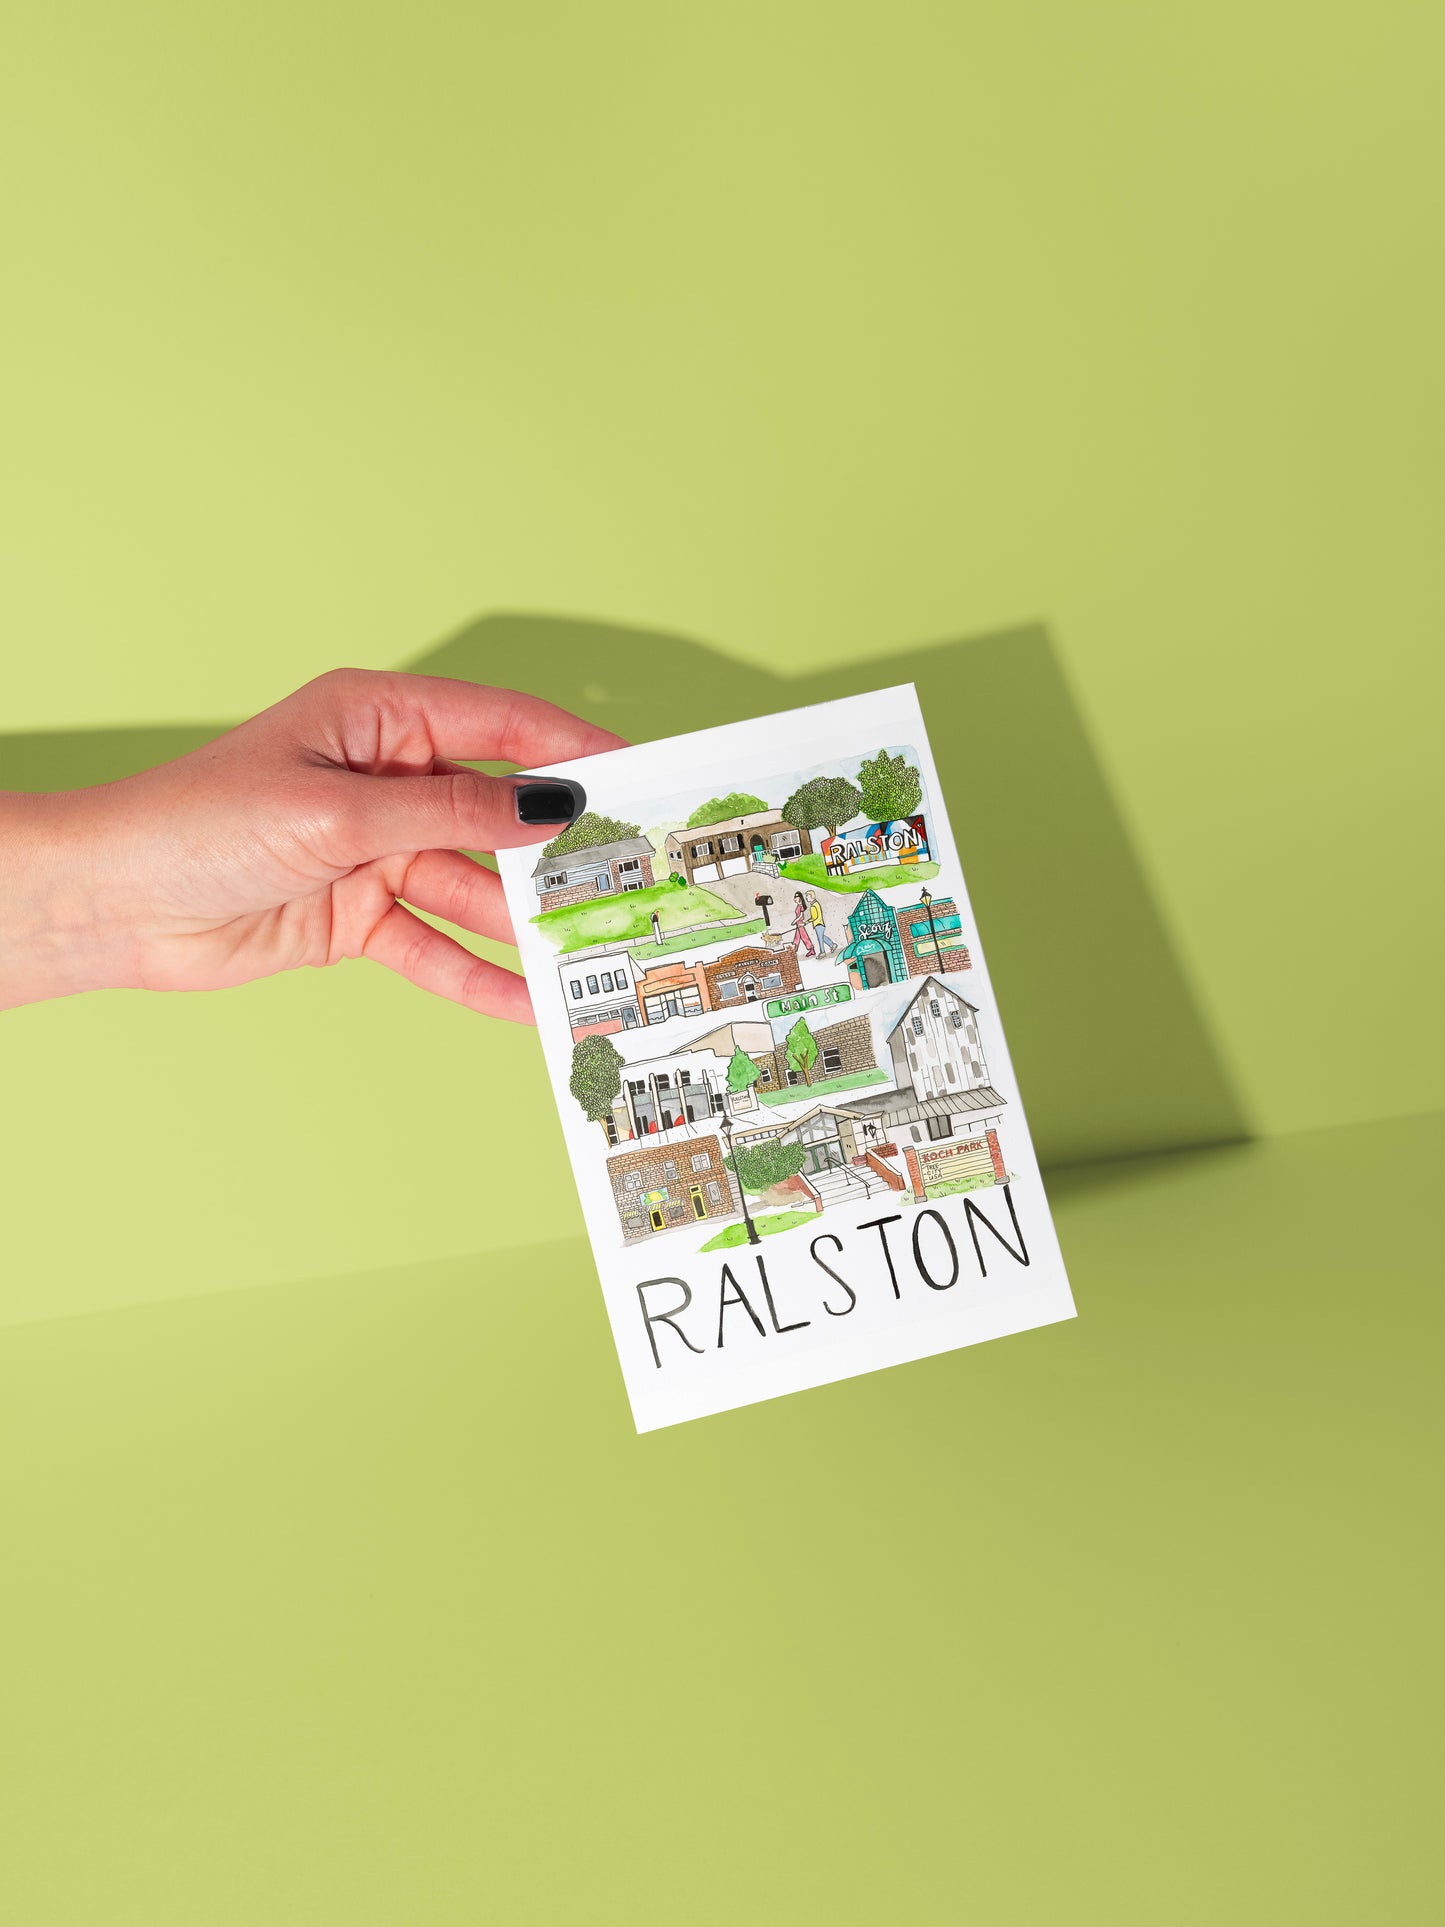 Ralston Greeting Card